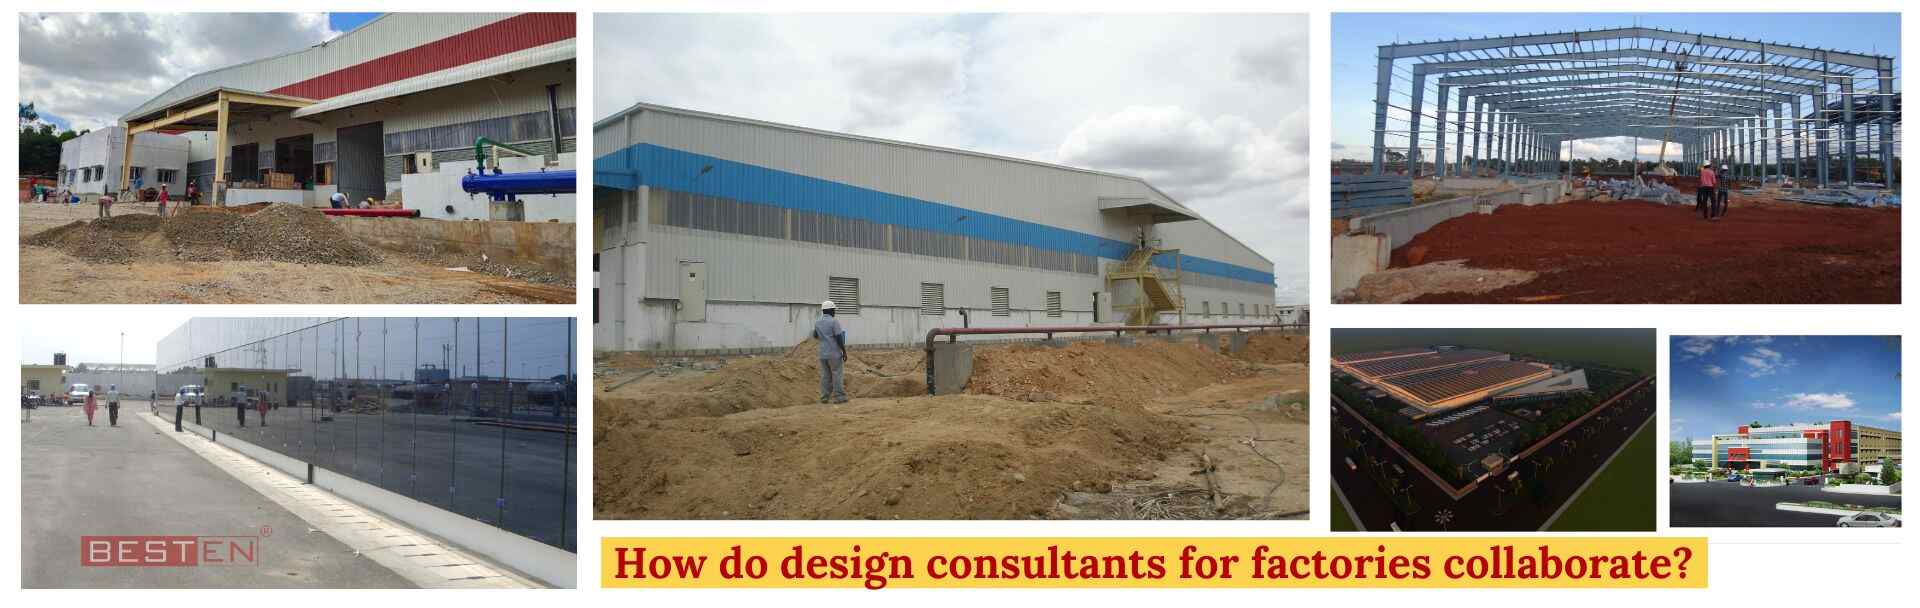 Design consultants for factories